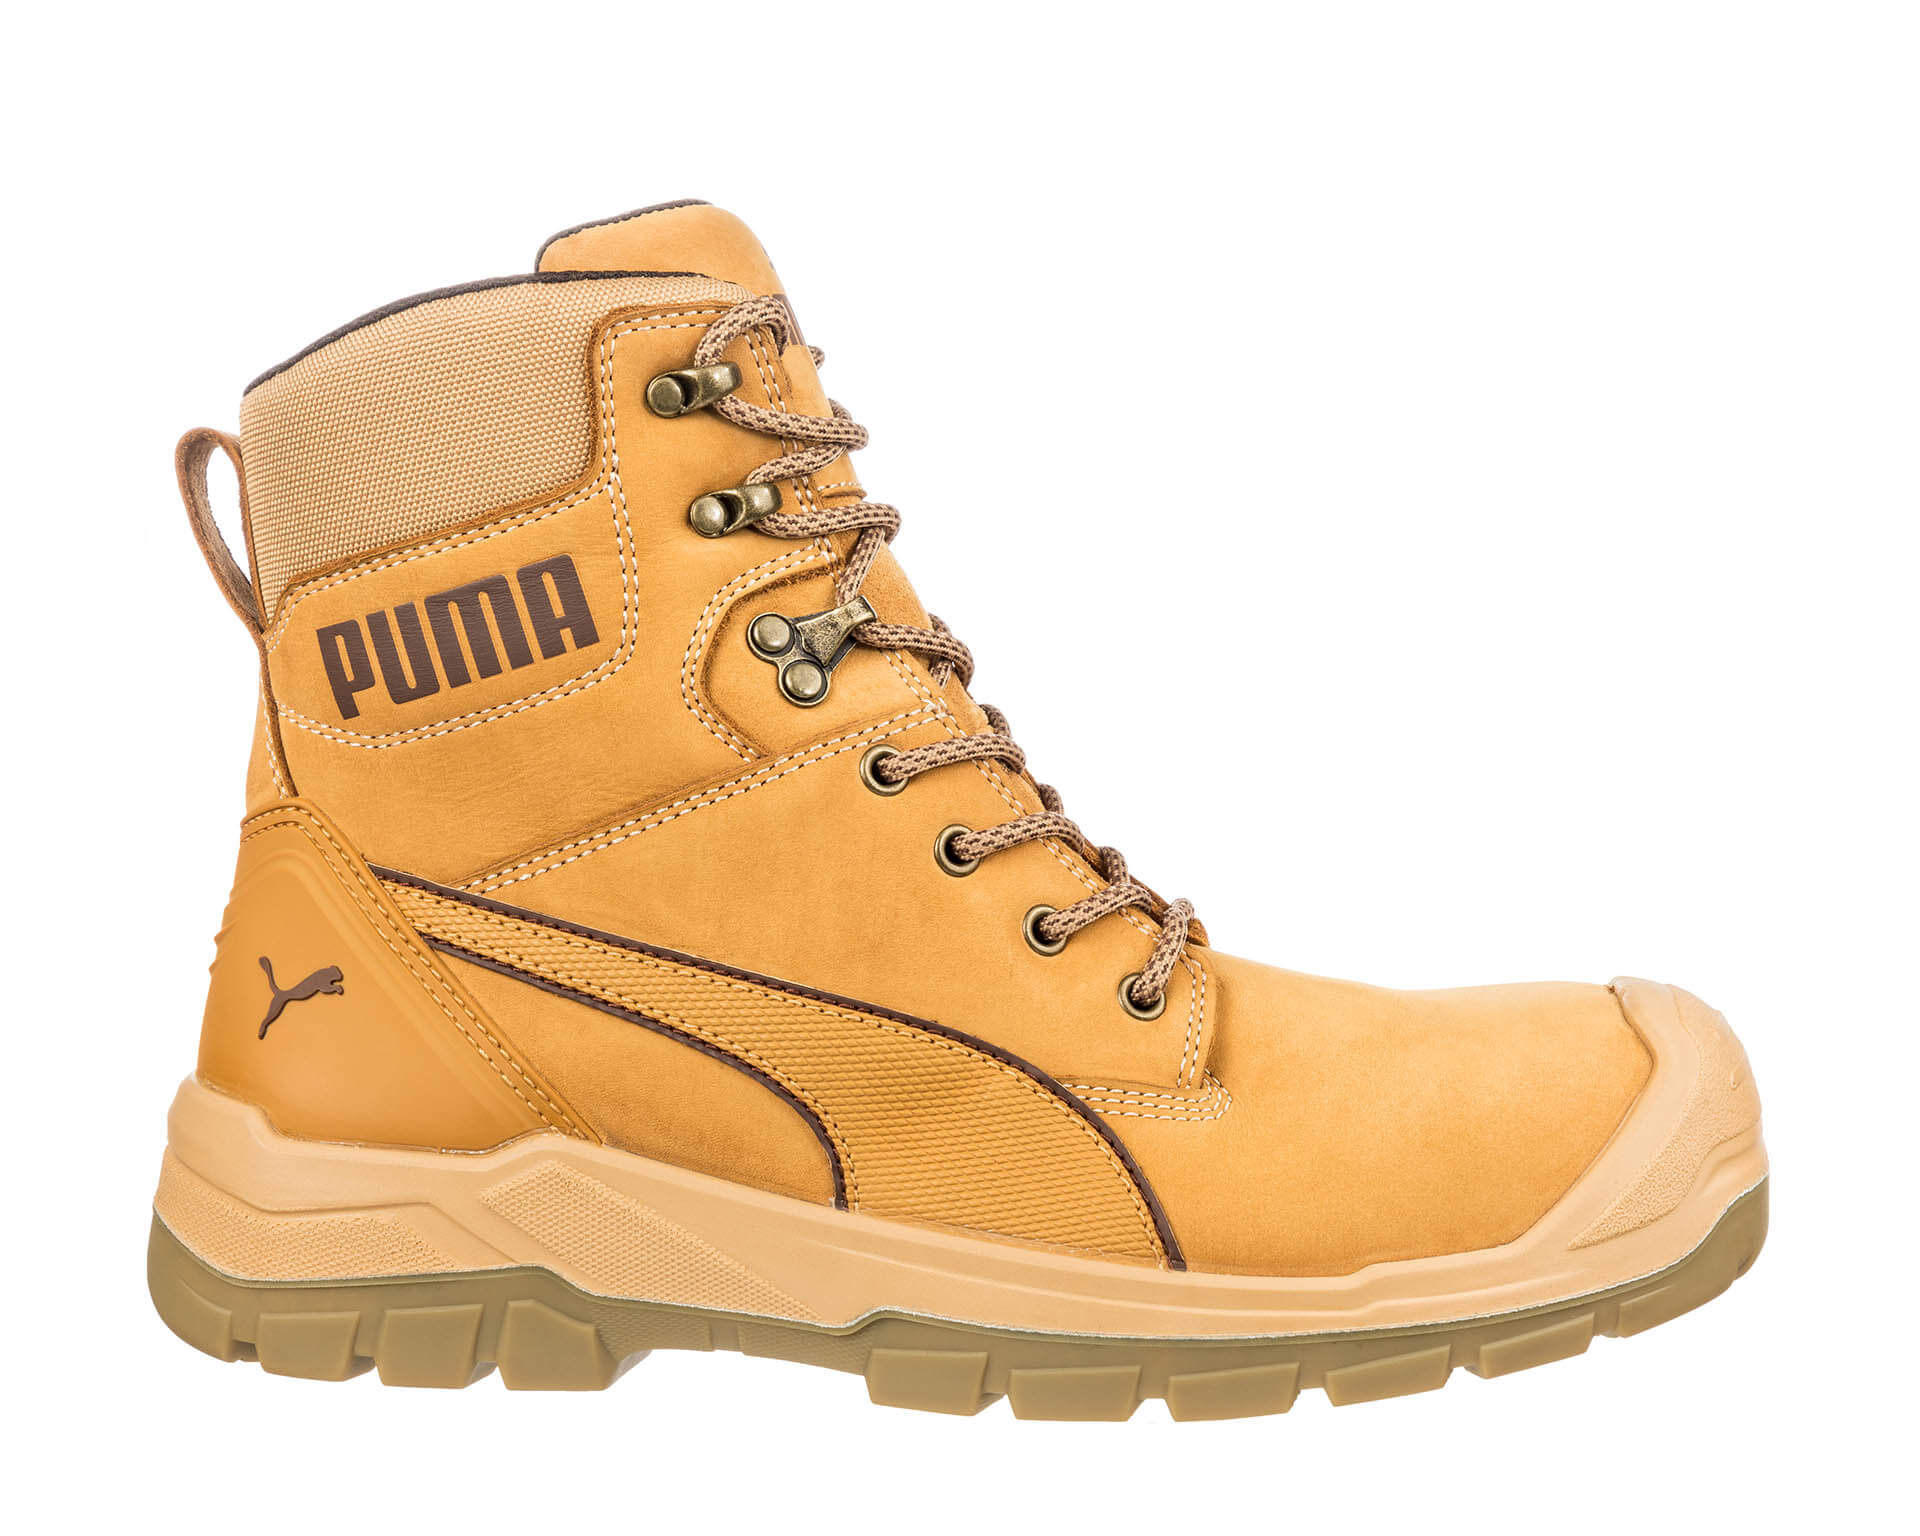 PUMA SAFETY CONQUEST WHEAT CTX HIGH ASTM EH WP | Puma Safety USA